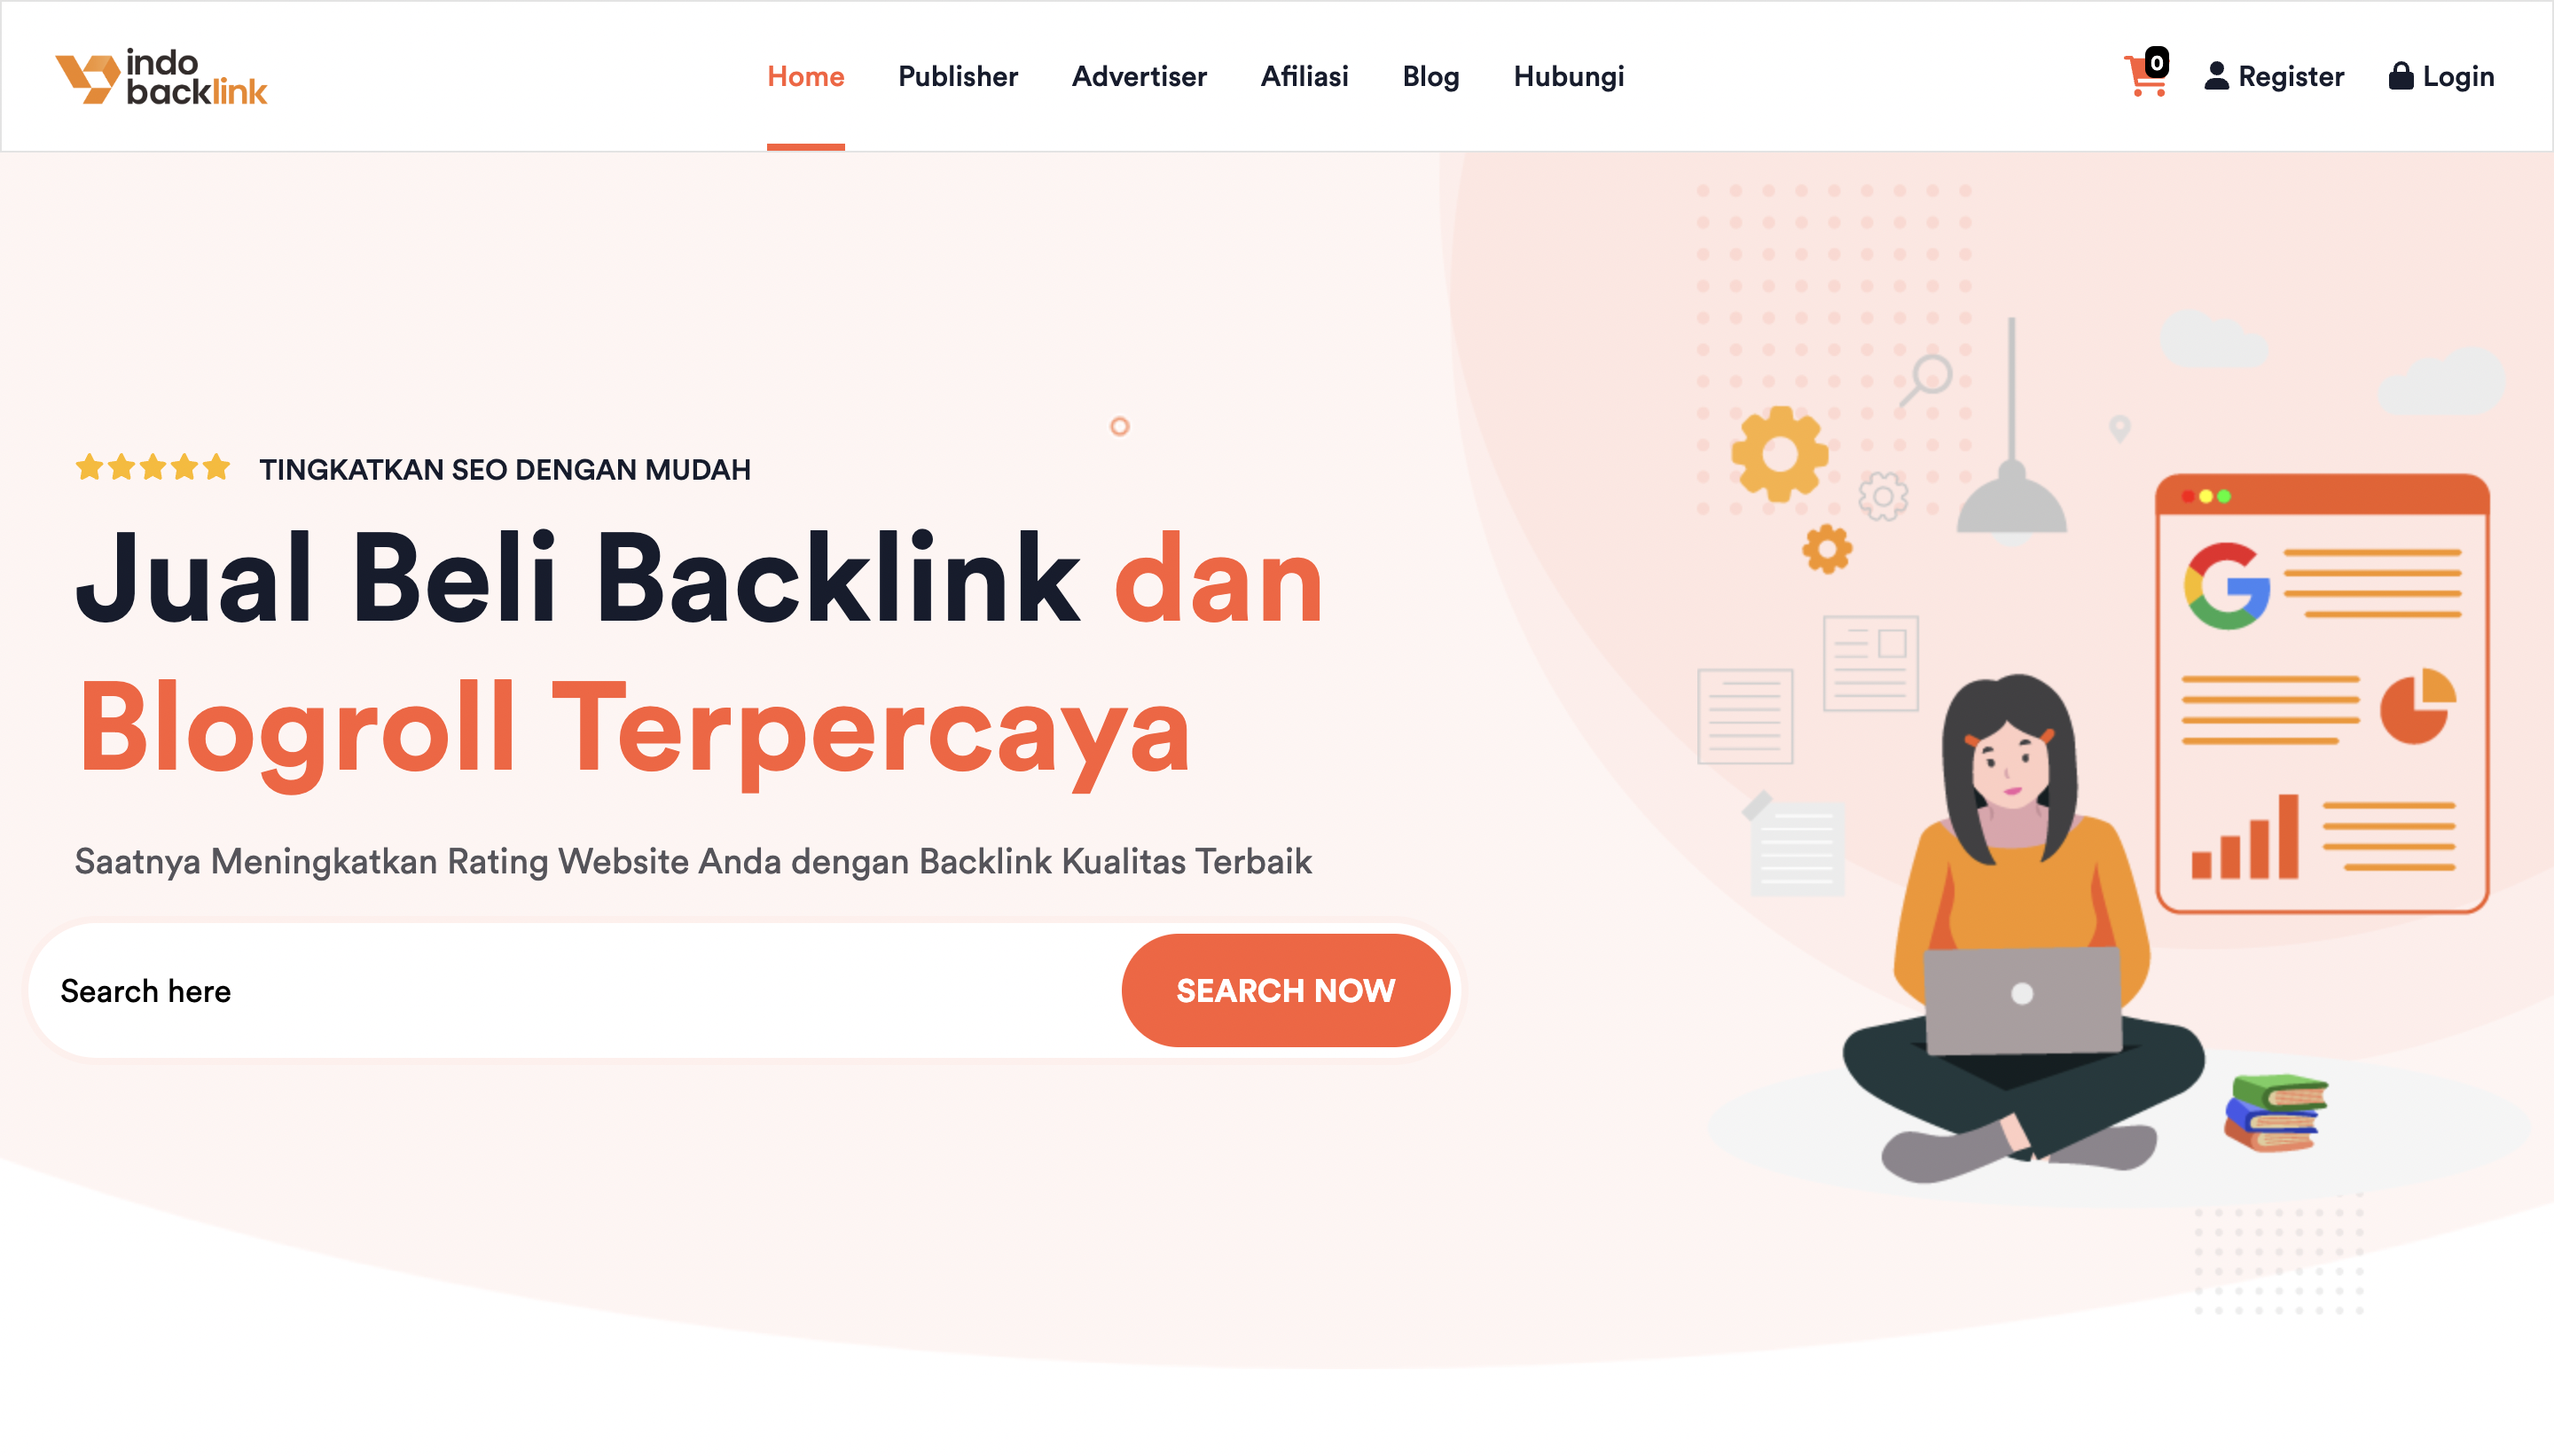 Mau Bisnis Jual Beli Backlink Dan Blogroll? Indobacklink.co.id Tempatnya